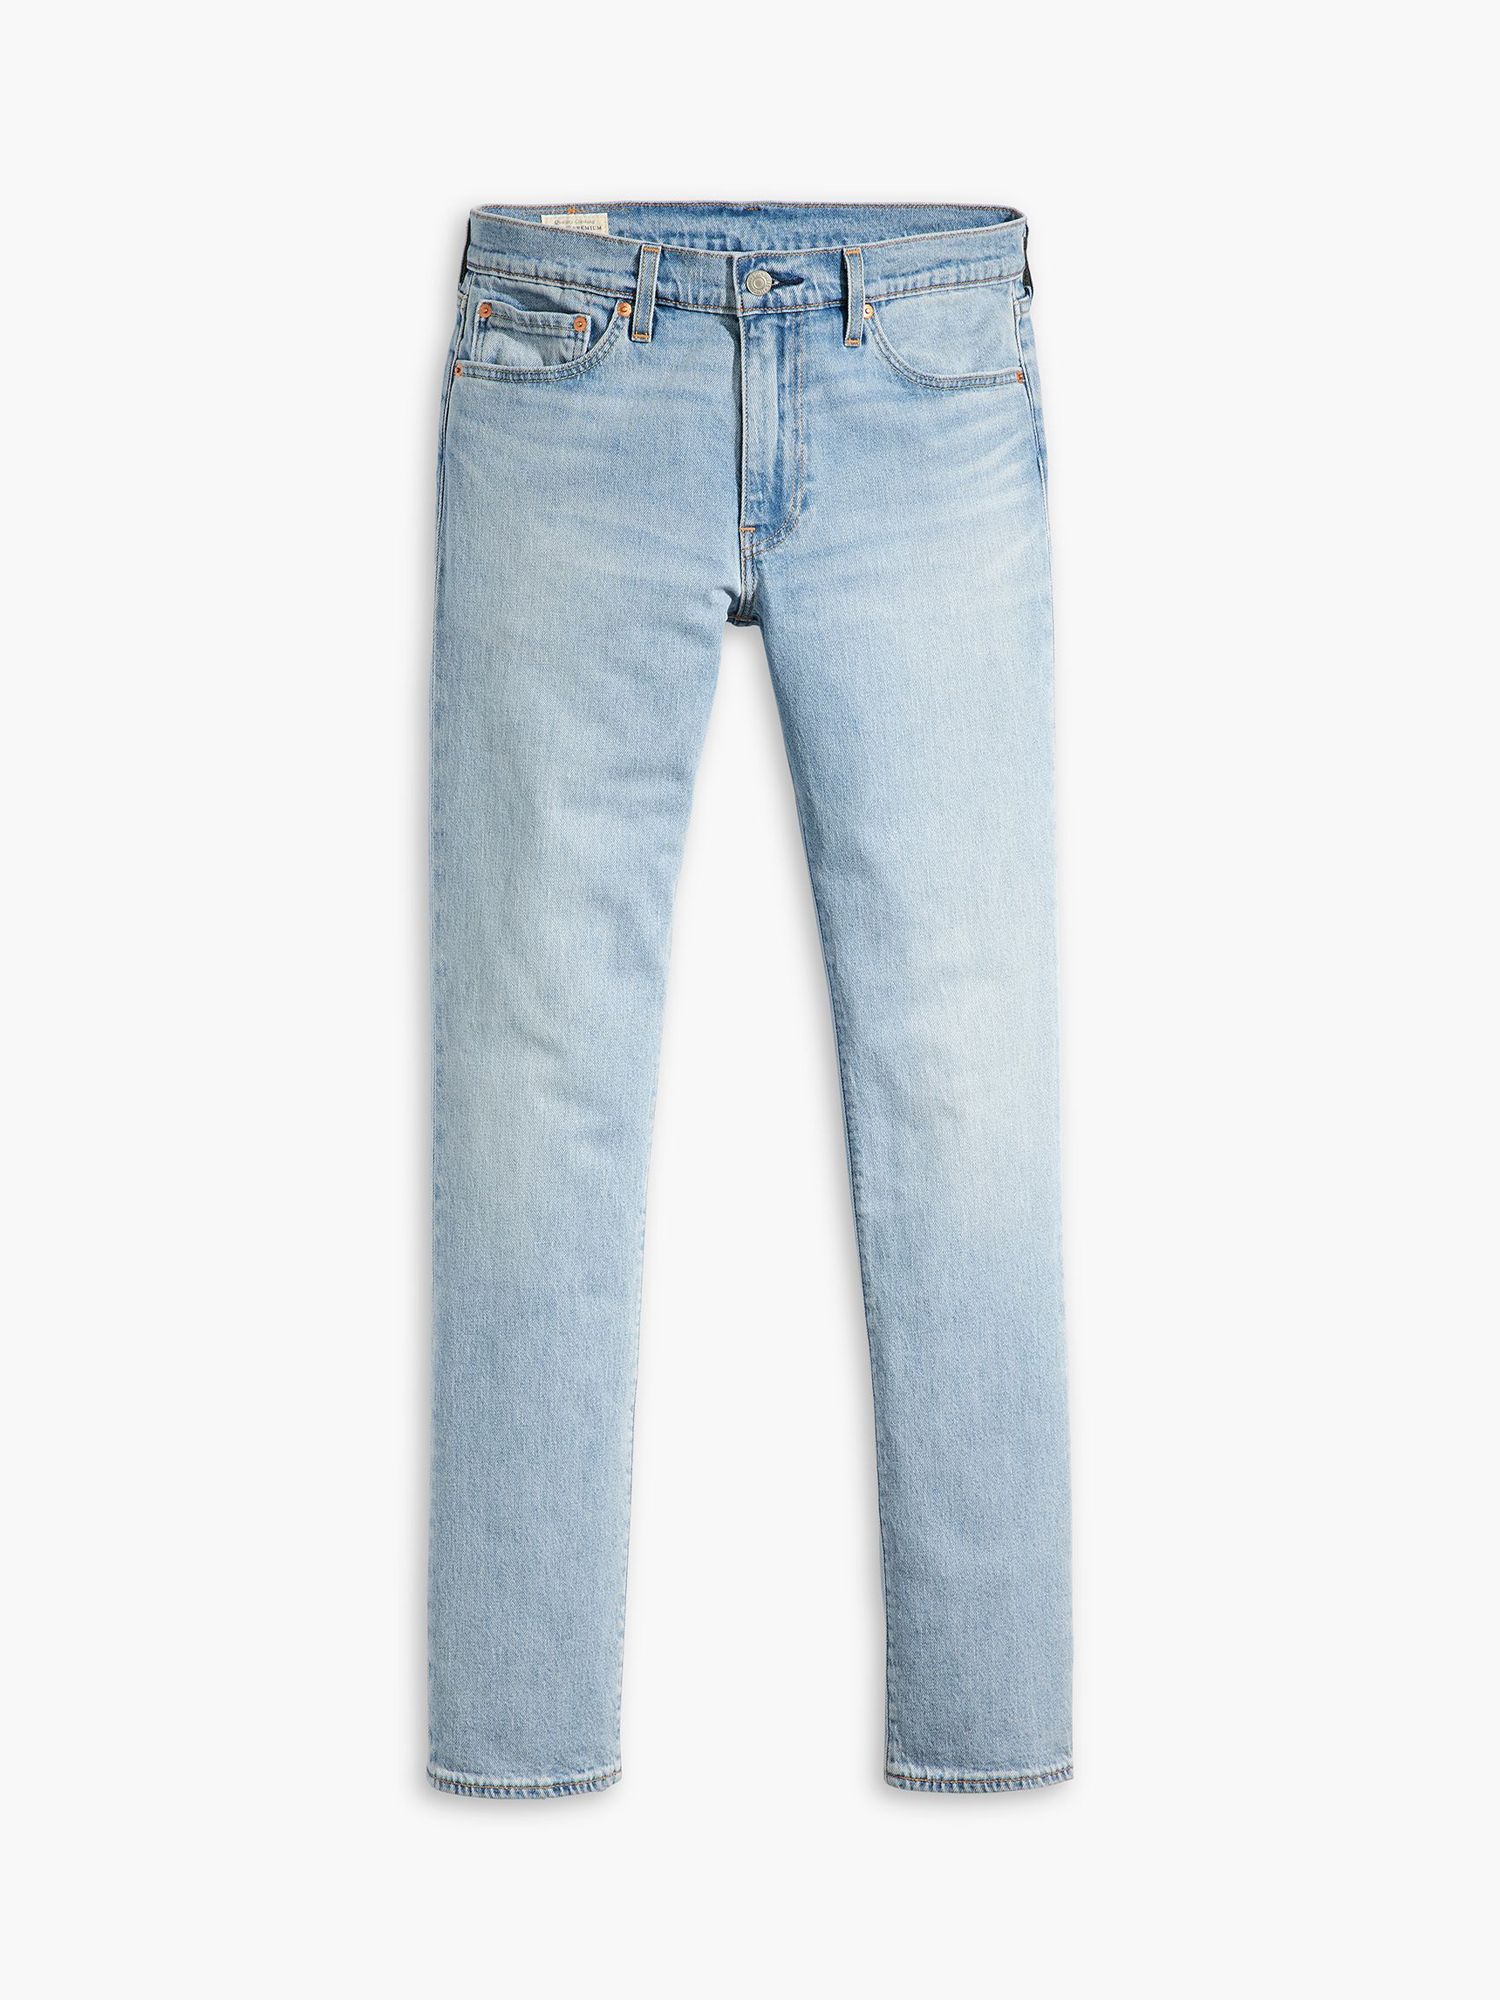 Levi's 511 Original Slim Jeans, Blue, 34S